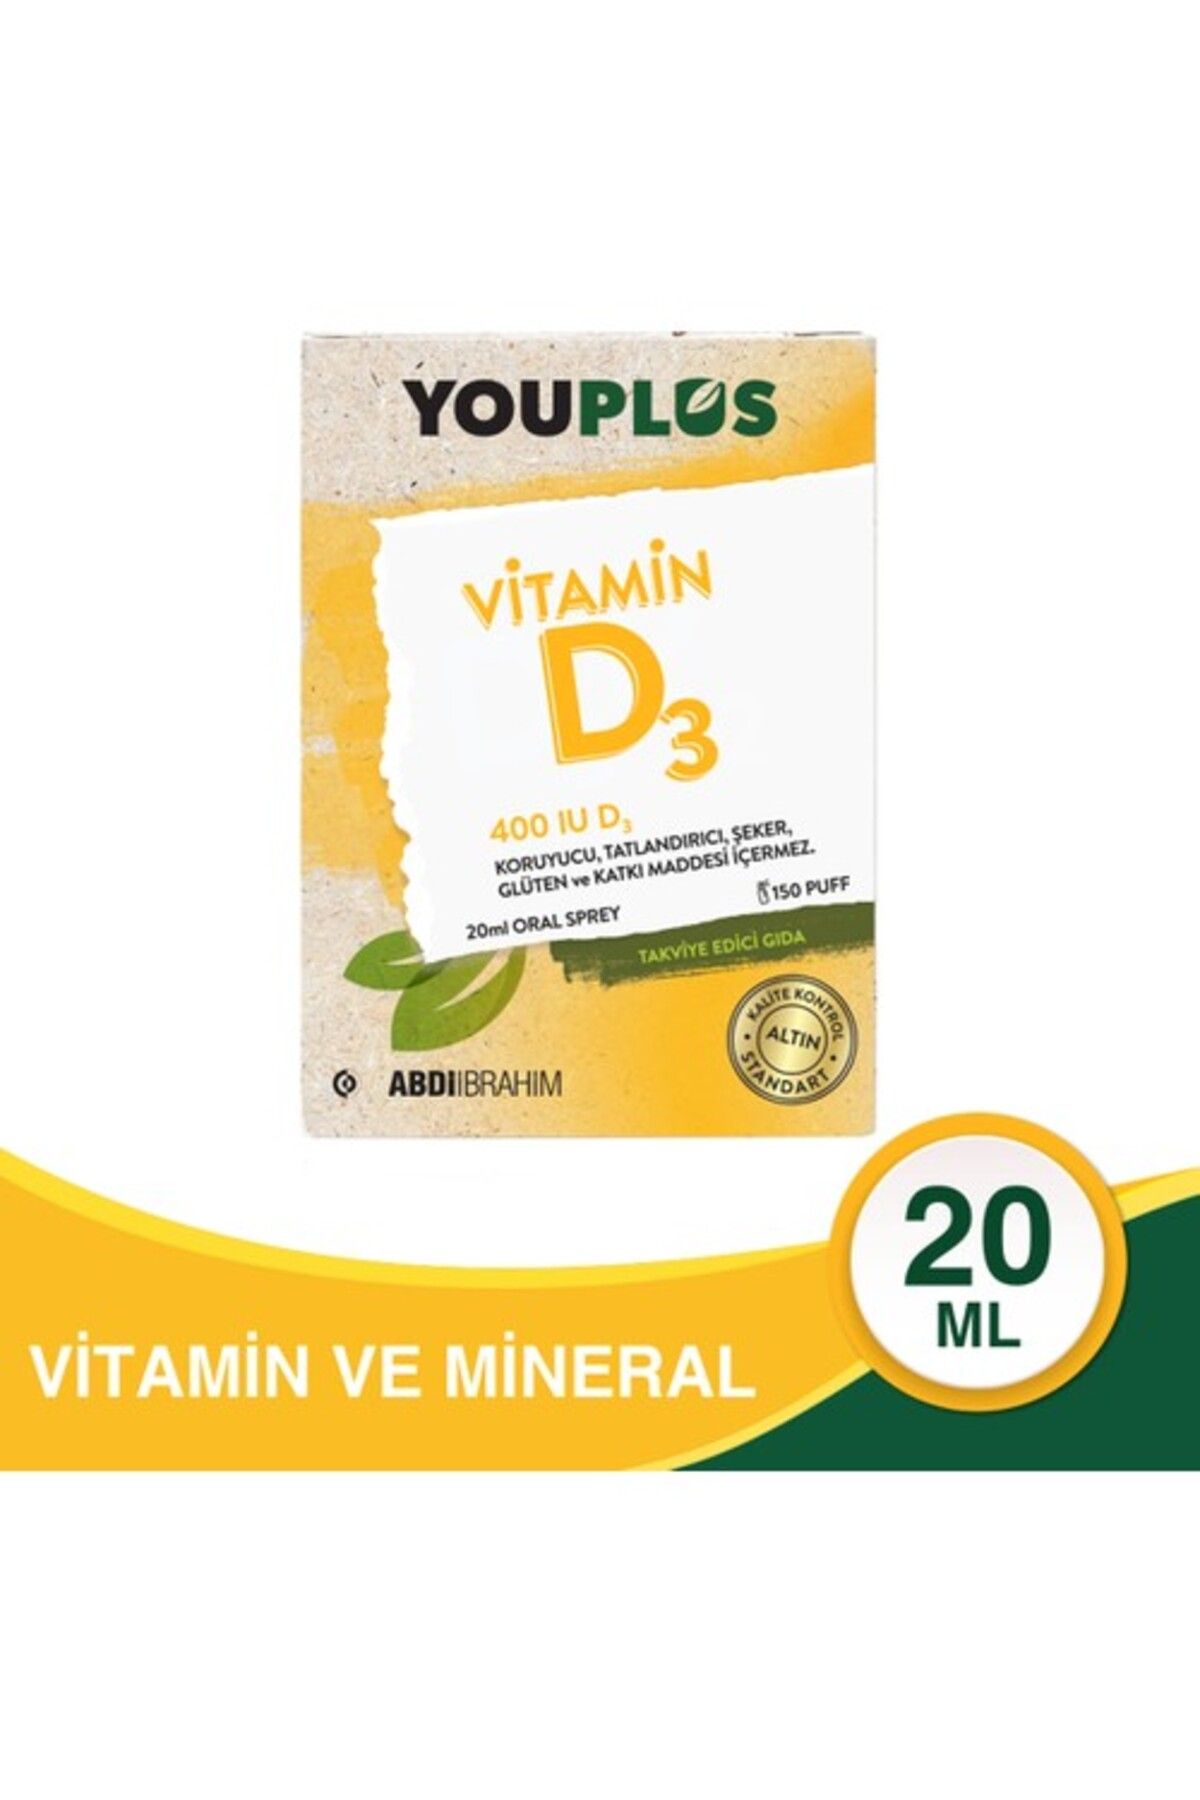 Youplus Vitamin D3 400 Iu 20 ml Oral Damla - Abdi Ibrahim